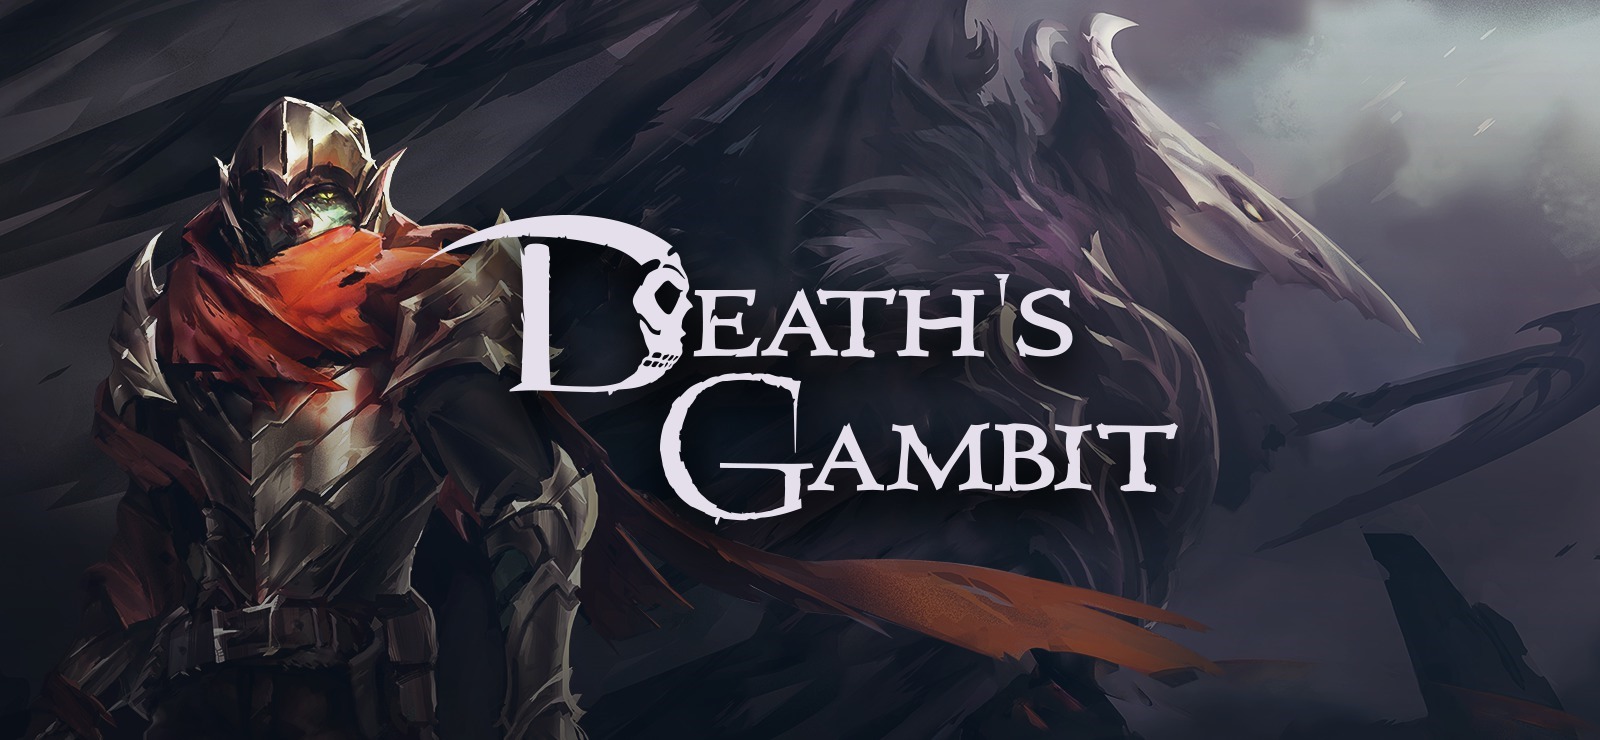 Death's Gambit - Reveal Trailer